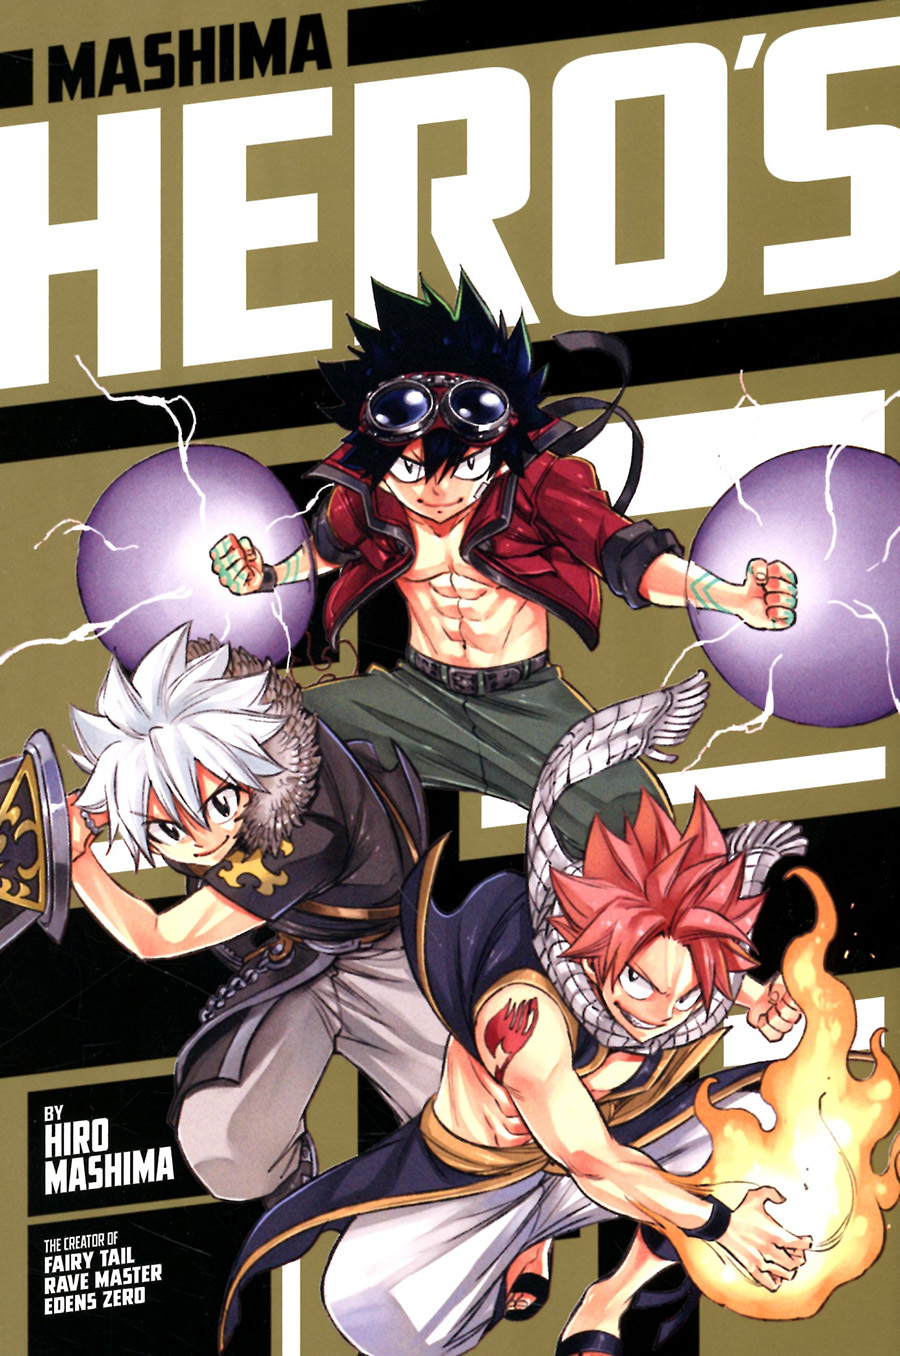 Mashima HEROS Vol 1 GN